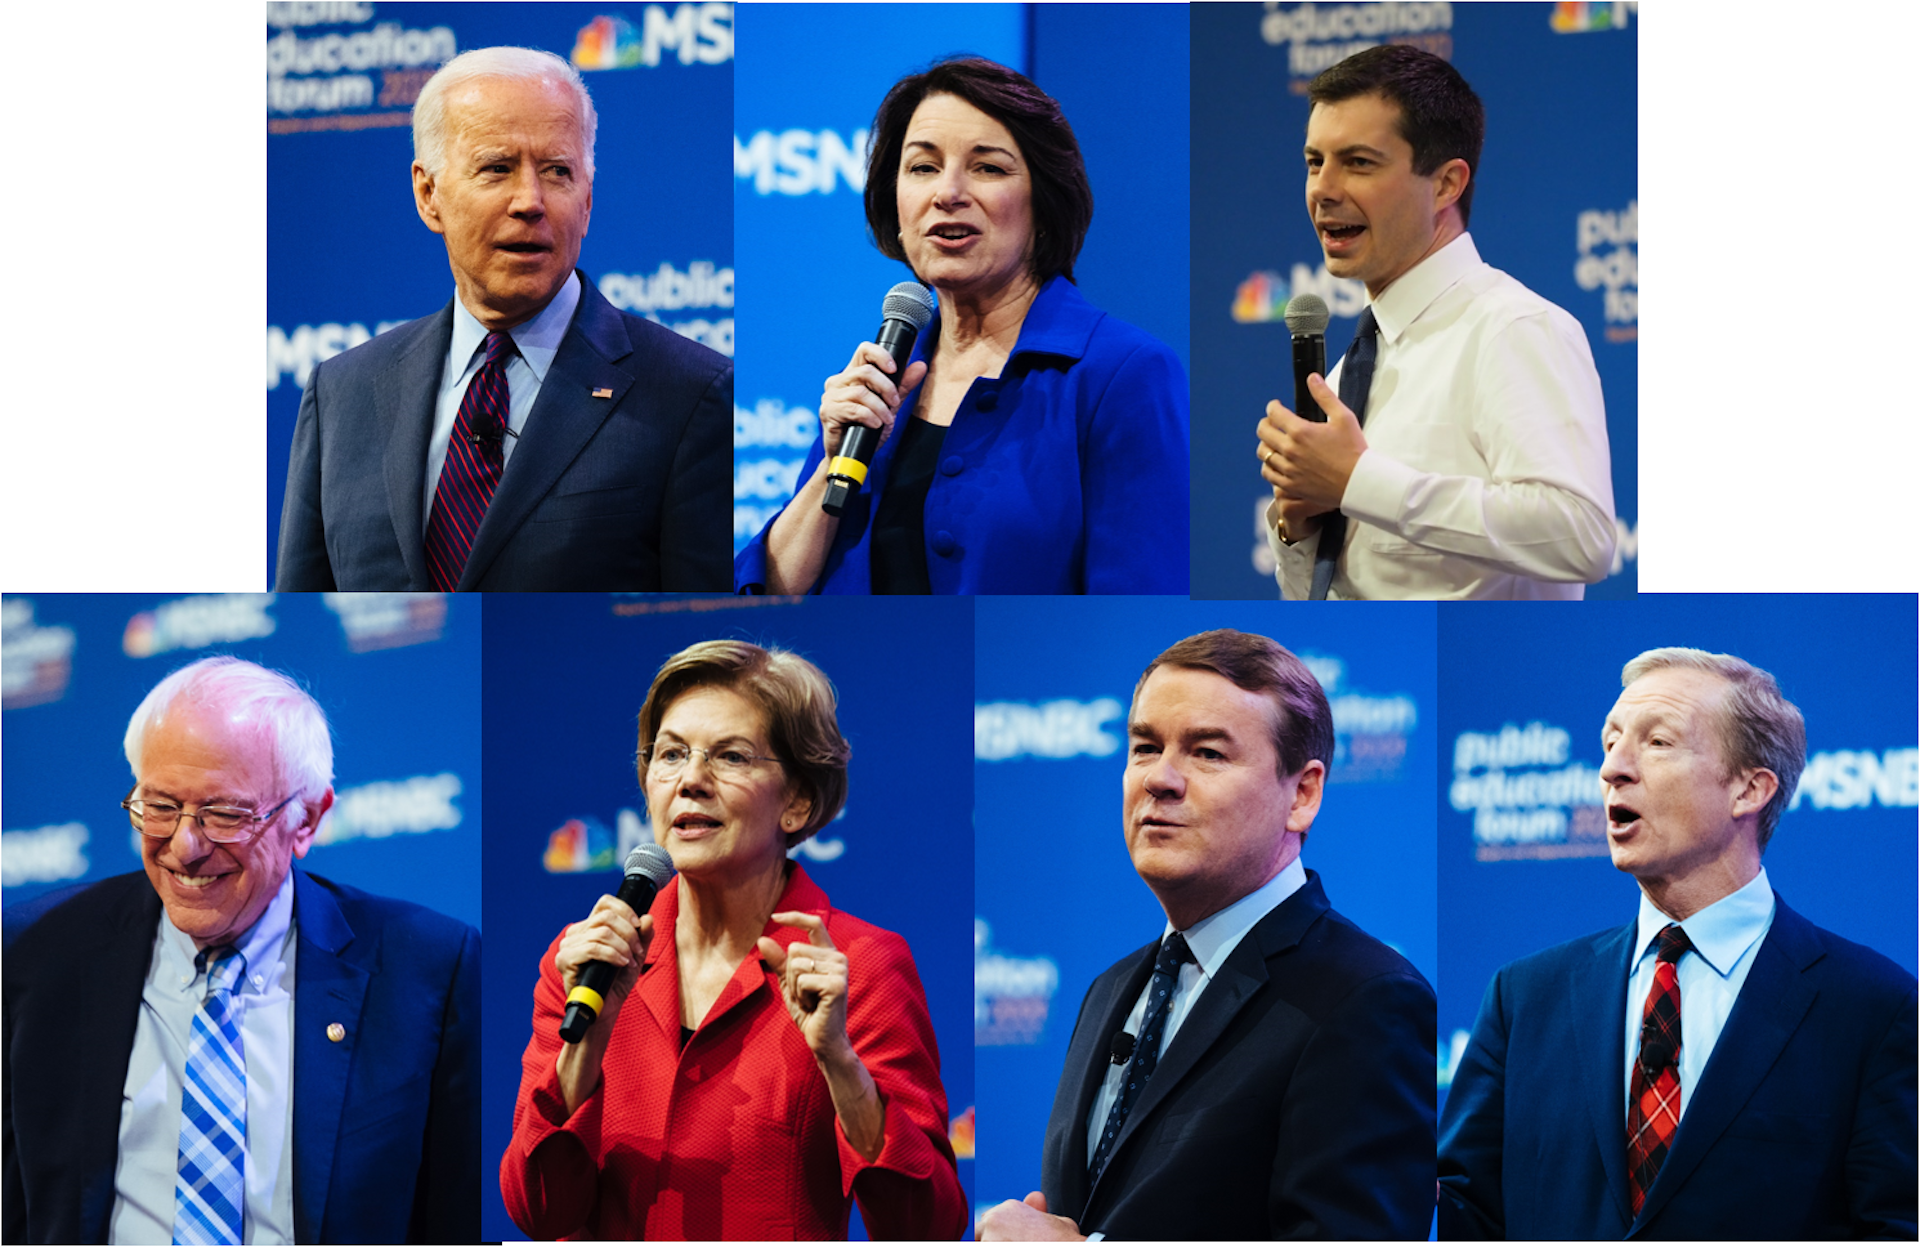 The candidates who participated in the education forum included (clockwise from top left): Joe Biden, Amy Klobuchar, Pete Buttigieg, Bernie Sanders, Elizabeth Warren, Michael Bennet, and Tom Steyer.